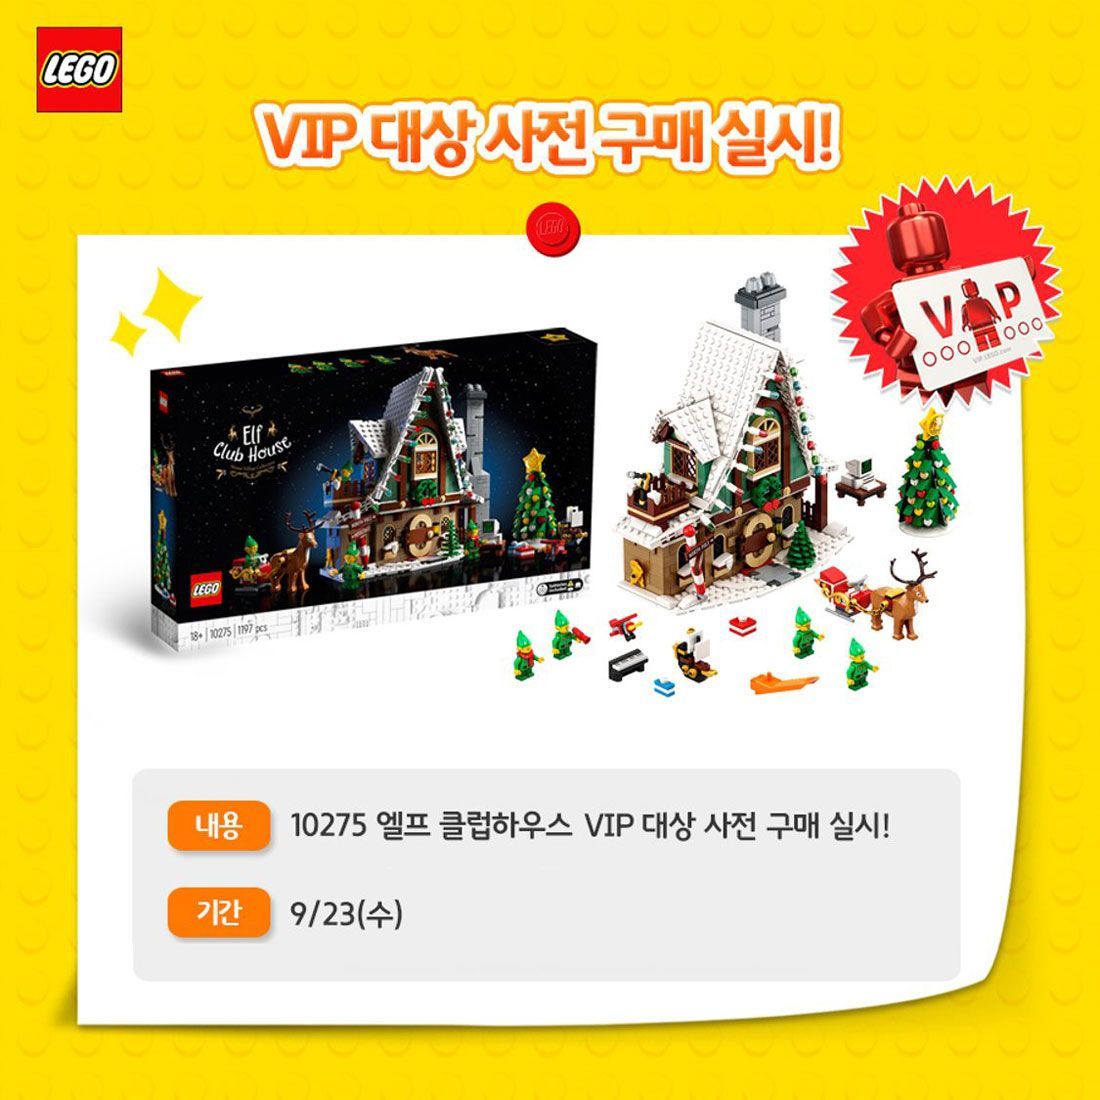 LEGO 10275 Elf Club House (Foto: LEGO Korea)